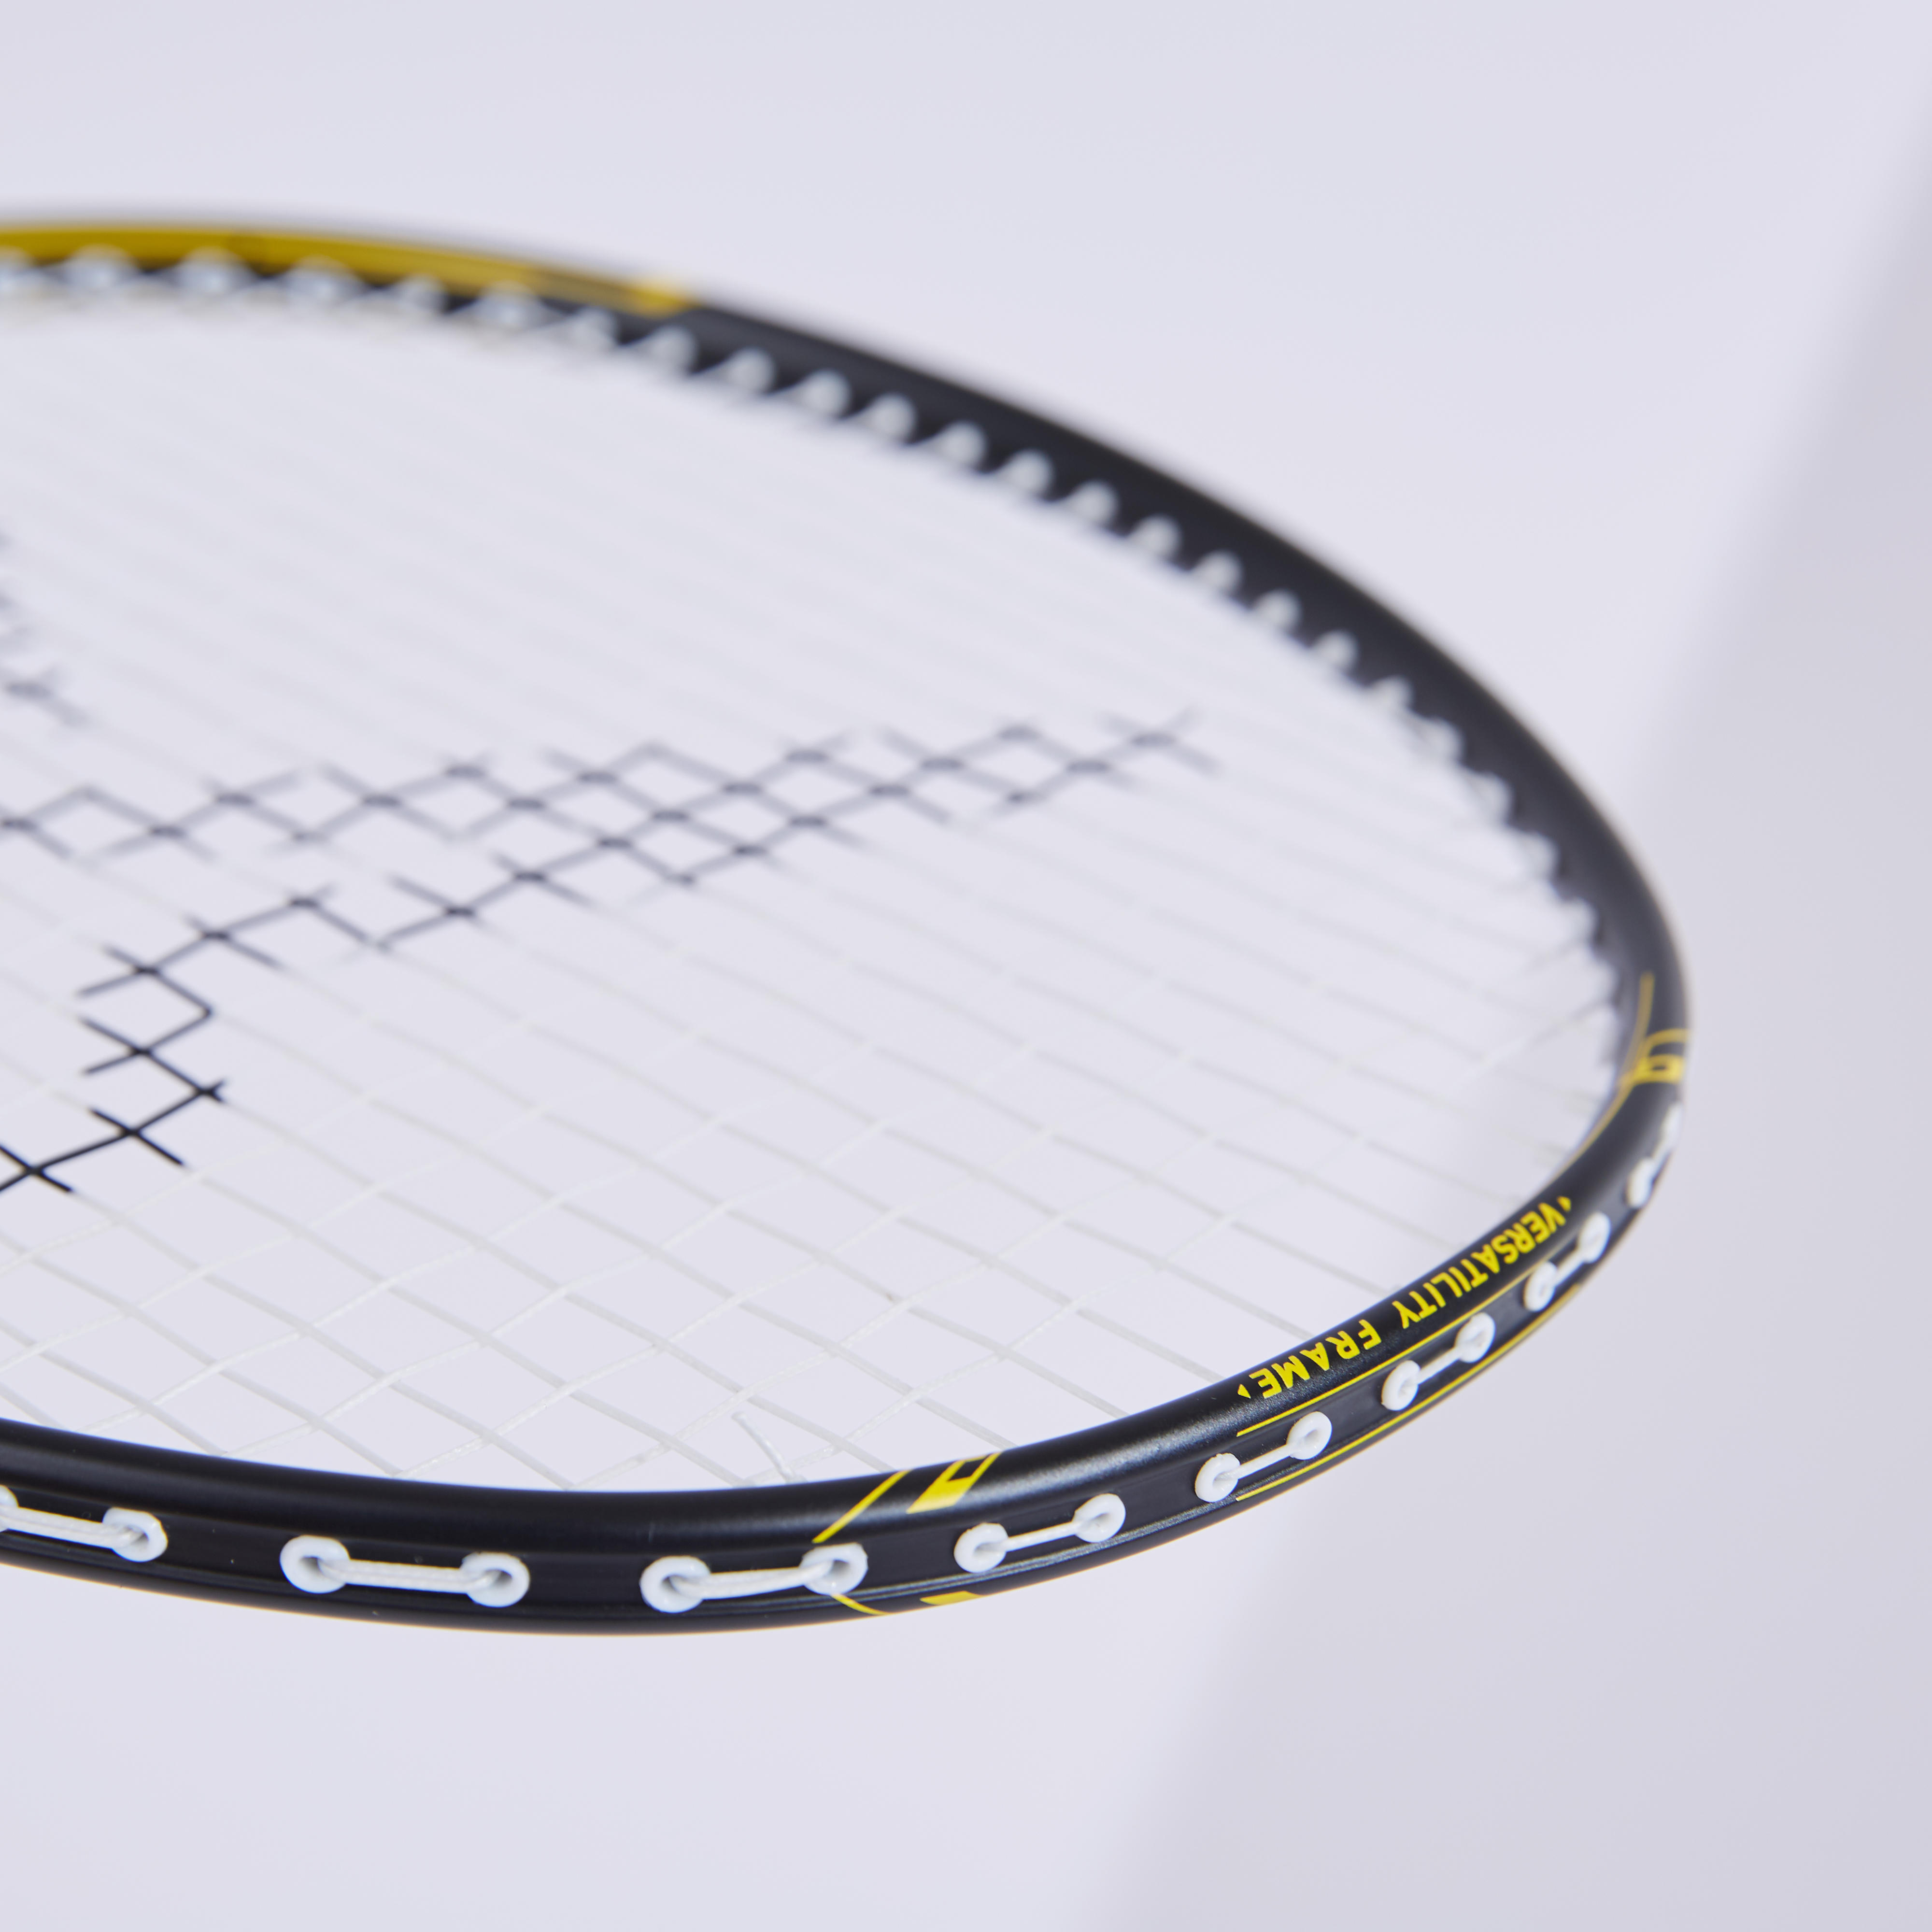 Raquette de badminton - BR 500 noir/jaune - PERFLY